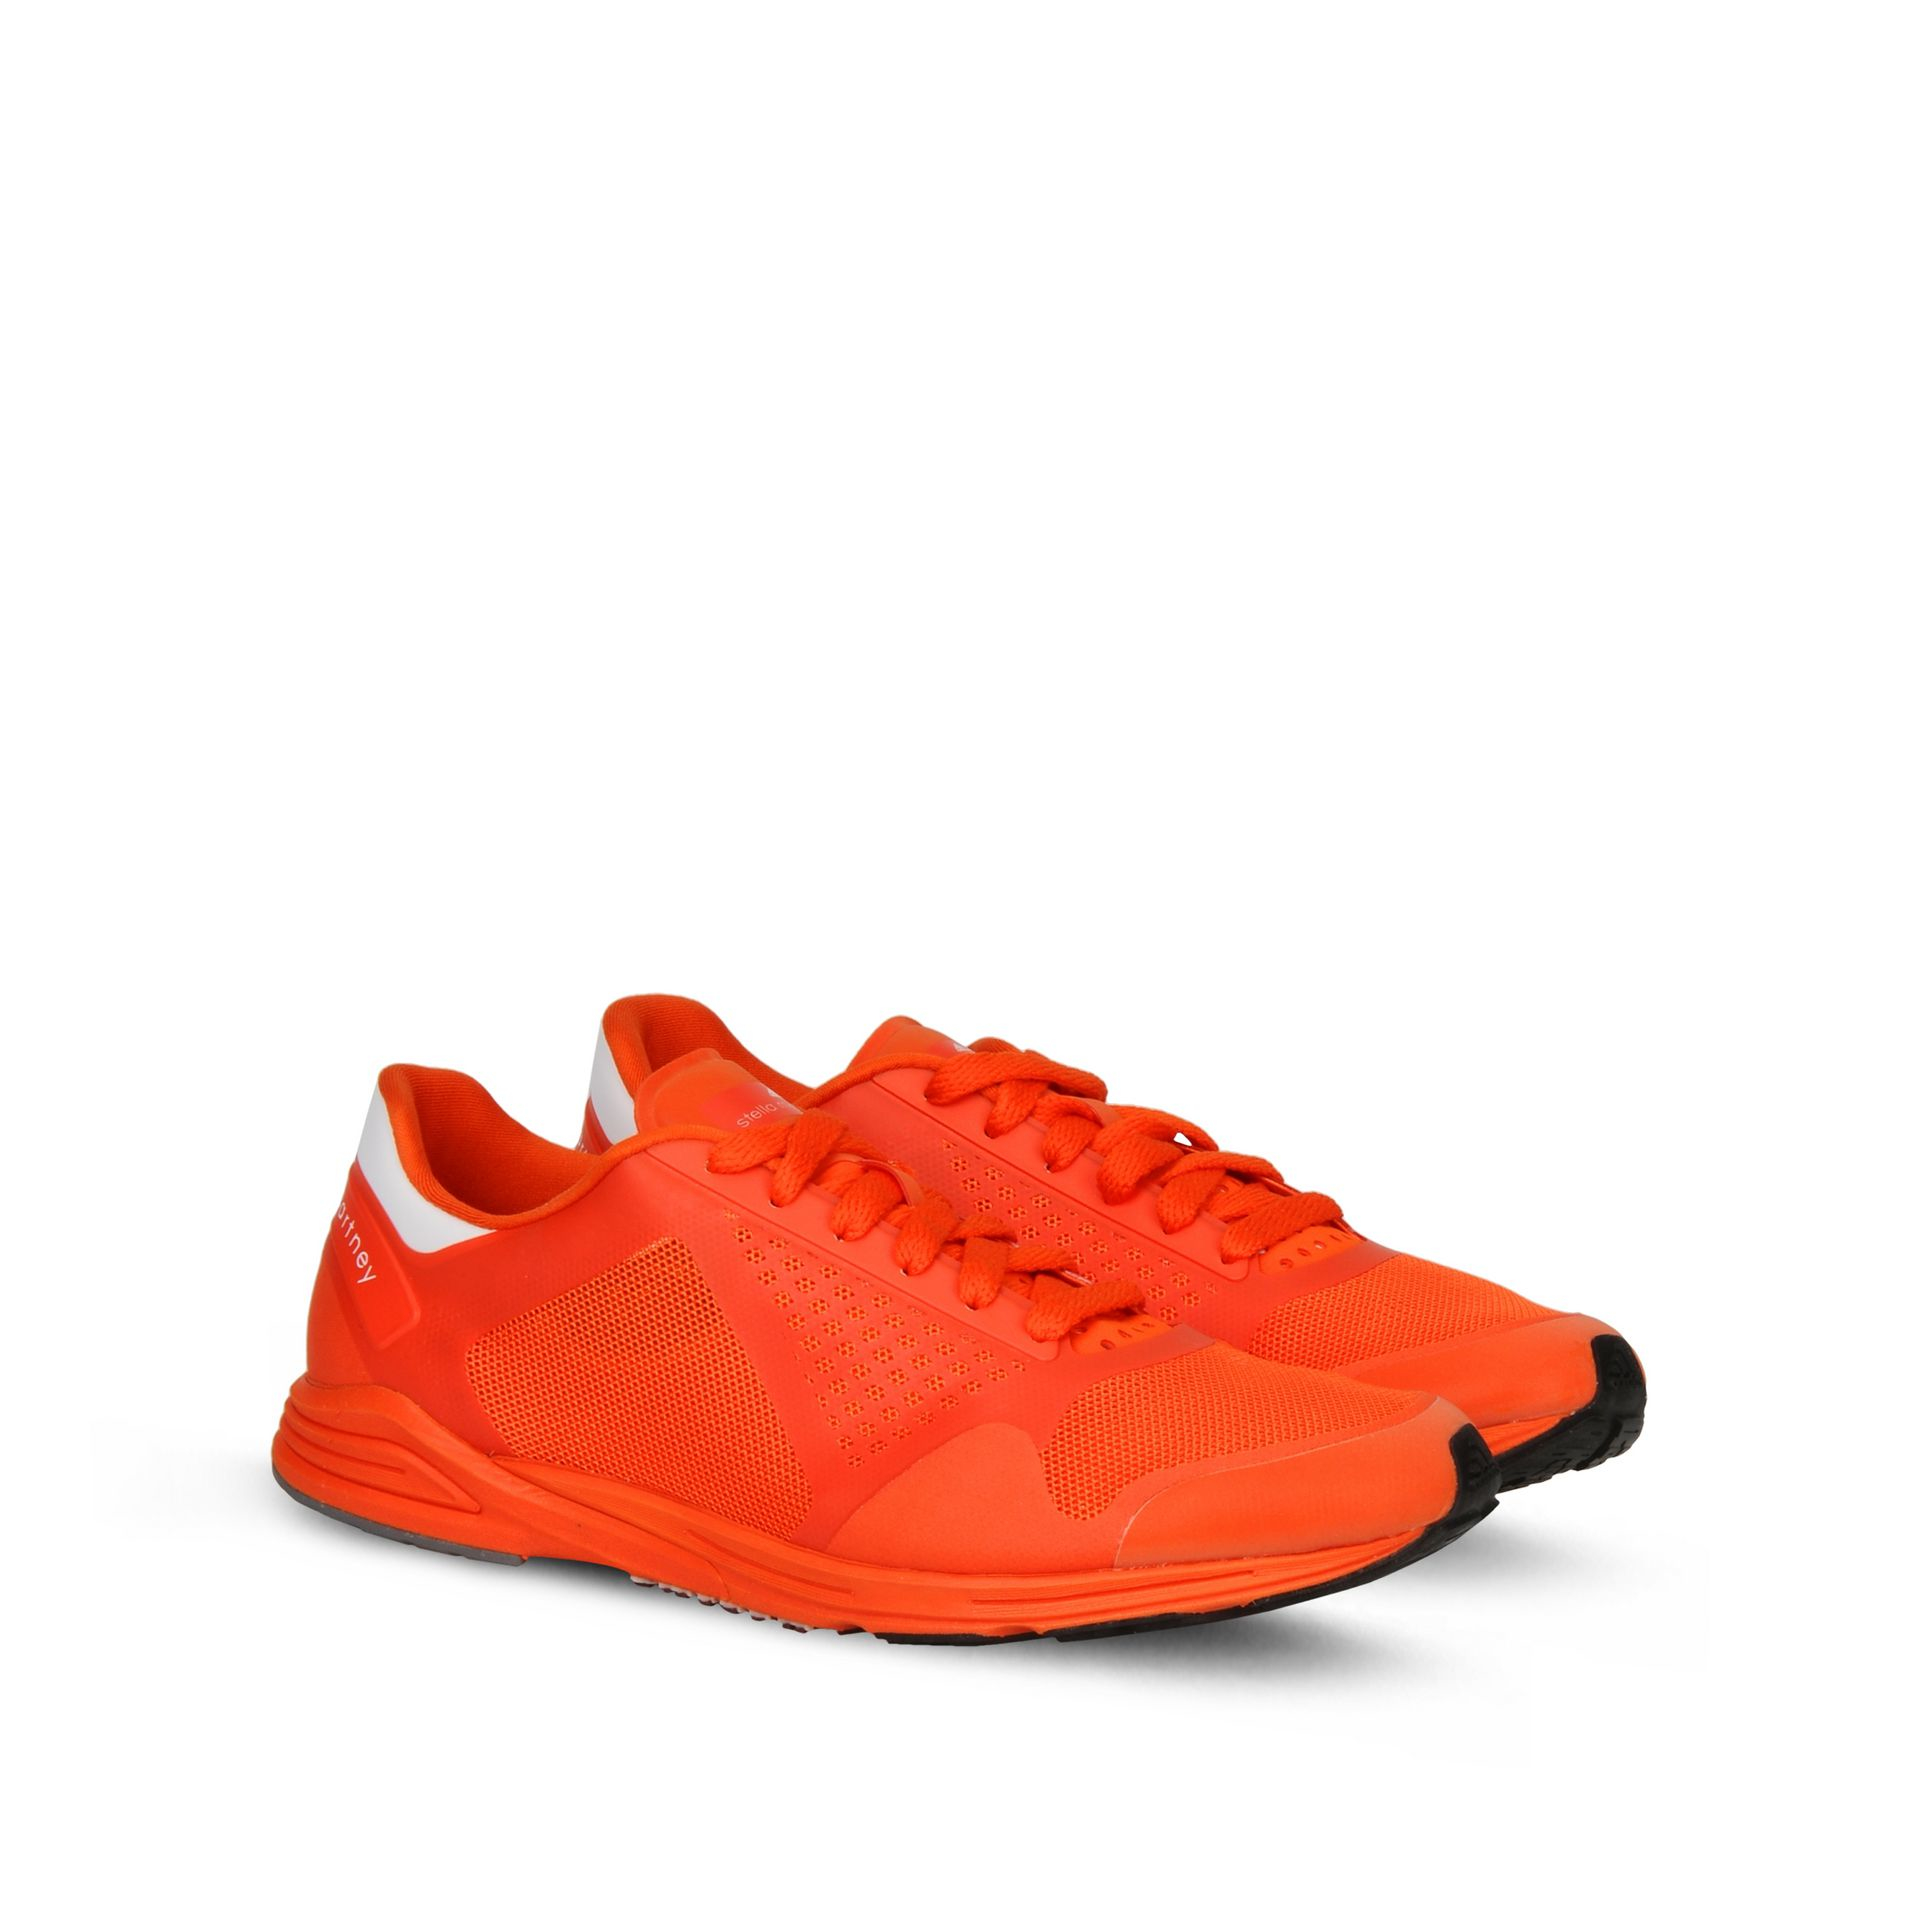 stella mccartney adidas orange